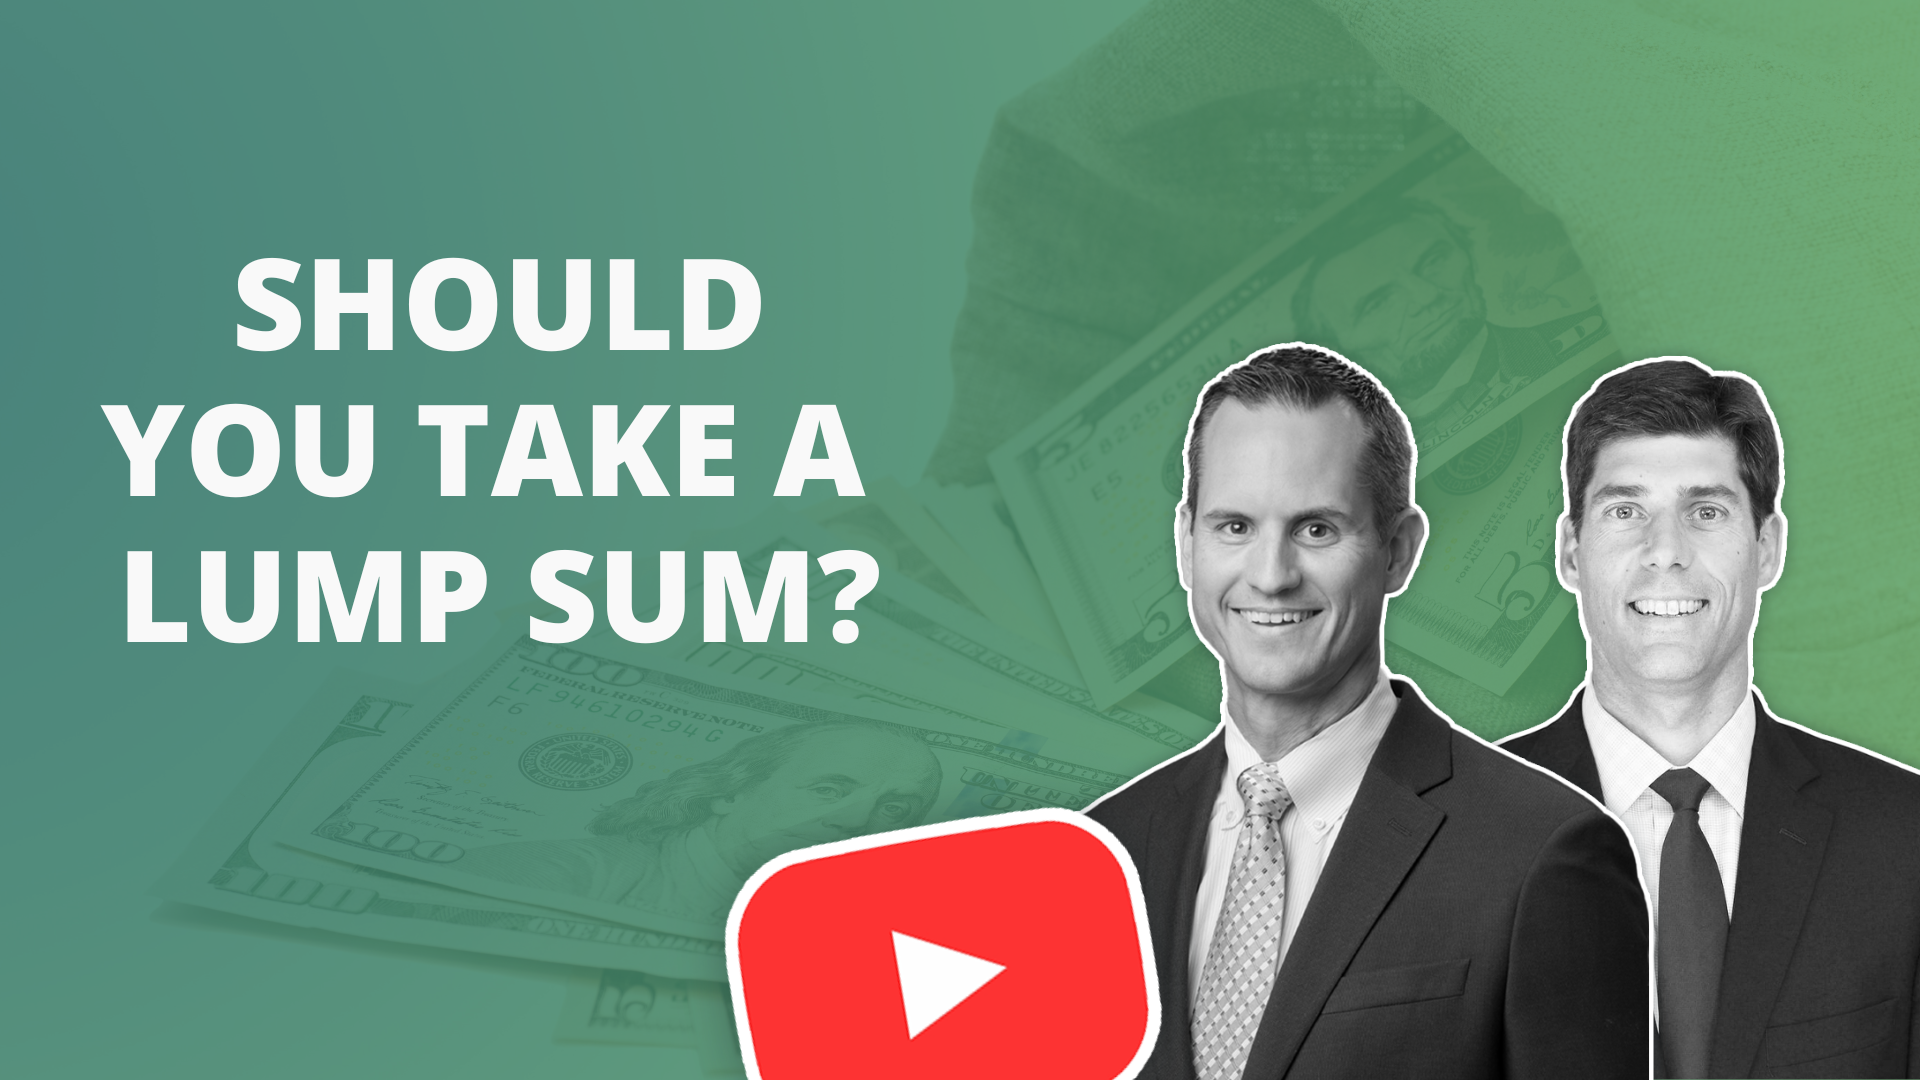 Should you take a lump sum?